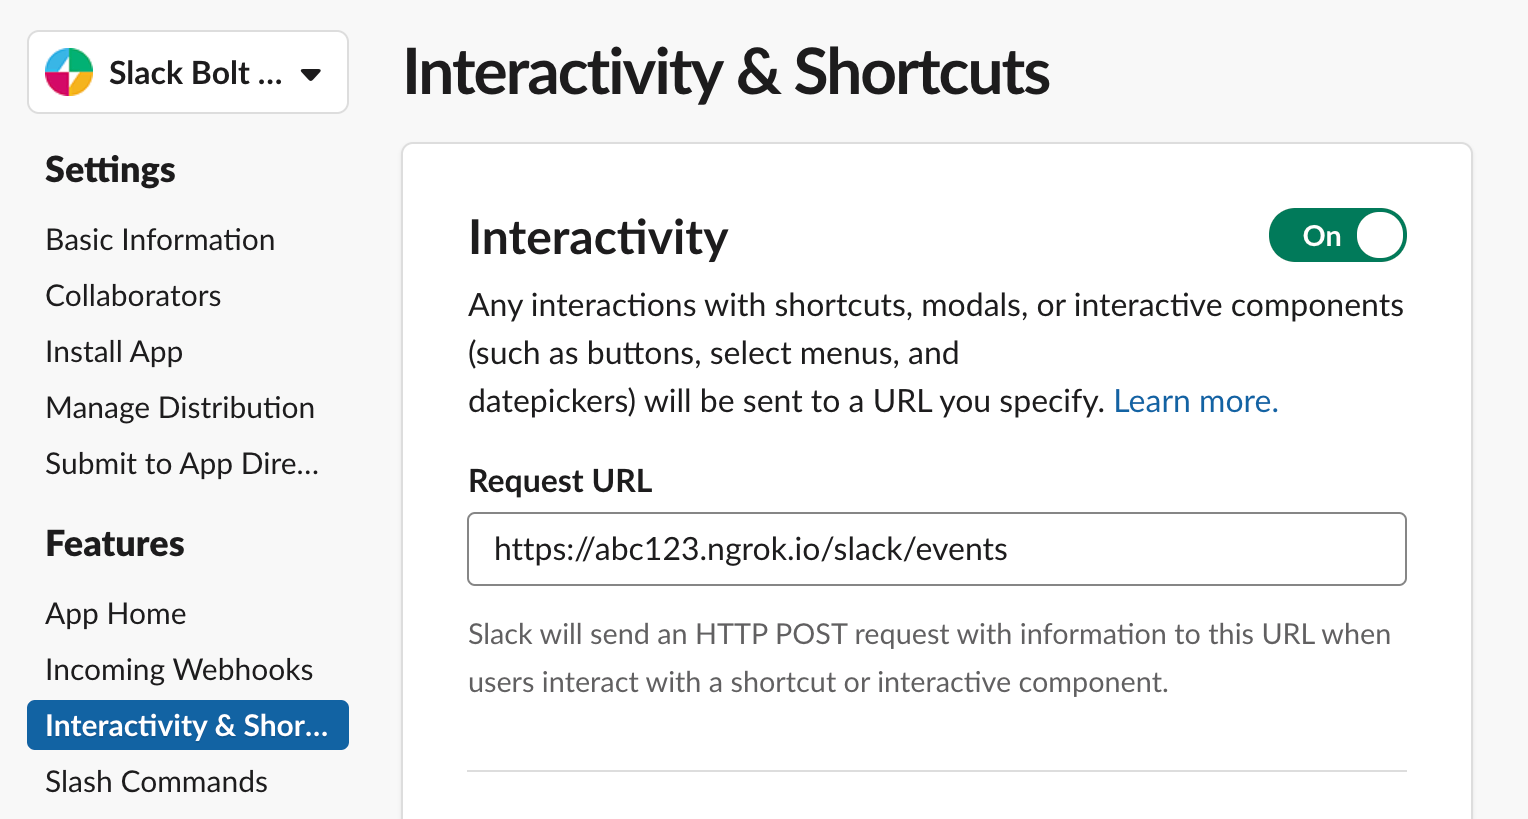 Interactivity & Shortcuts page